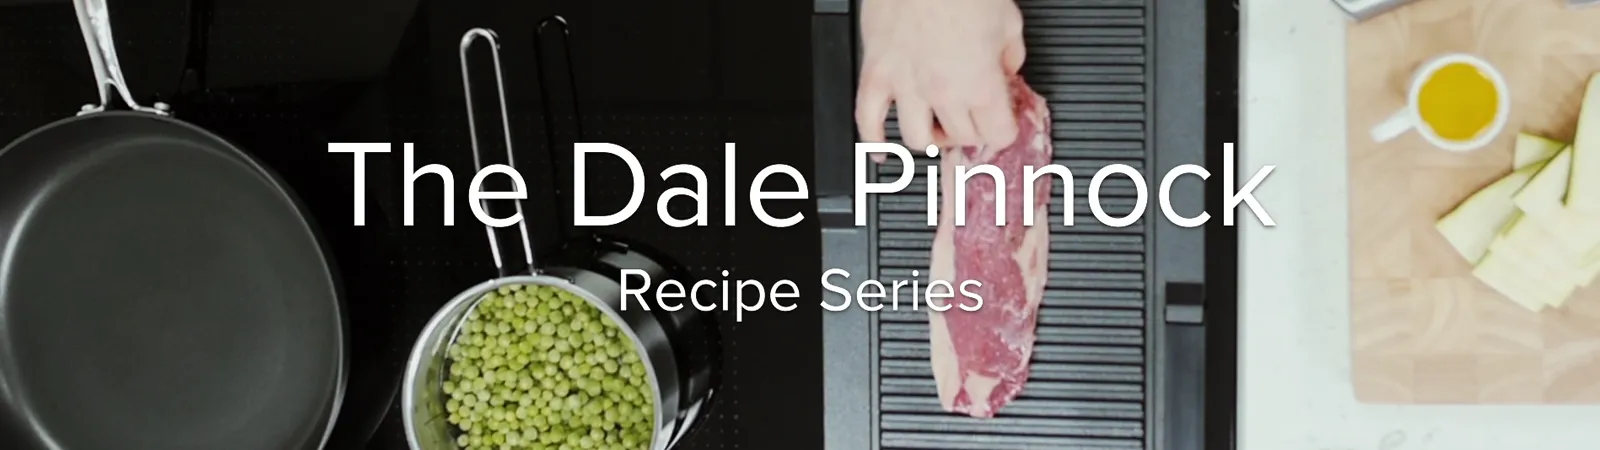 The Dale Pinnock Recipe Series